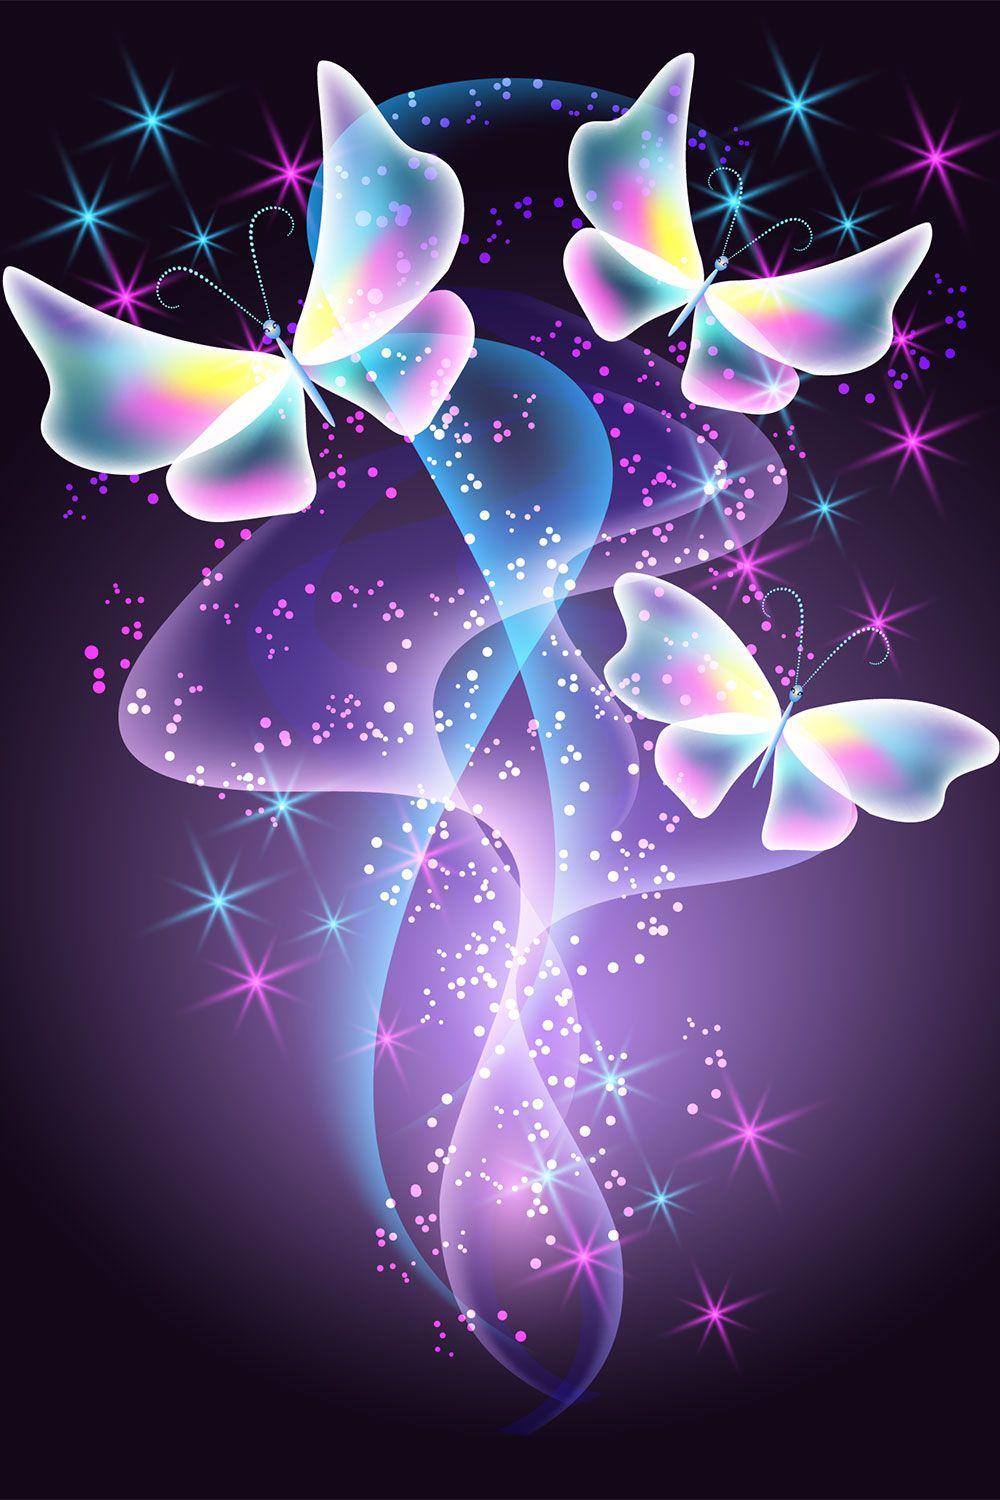 Neon Butterfly Wallpapers - Top Free Neon Butterfly ...